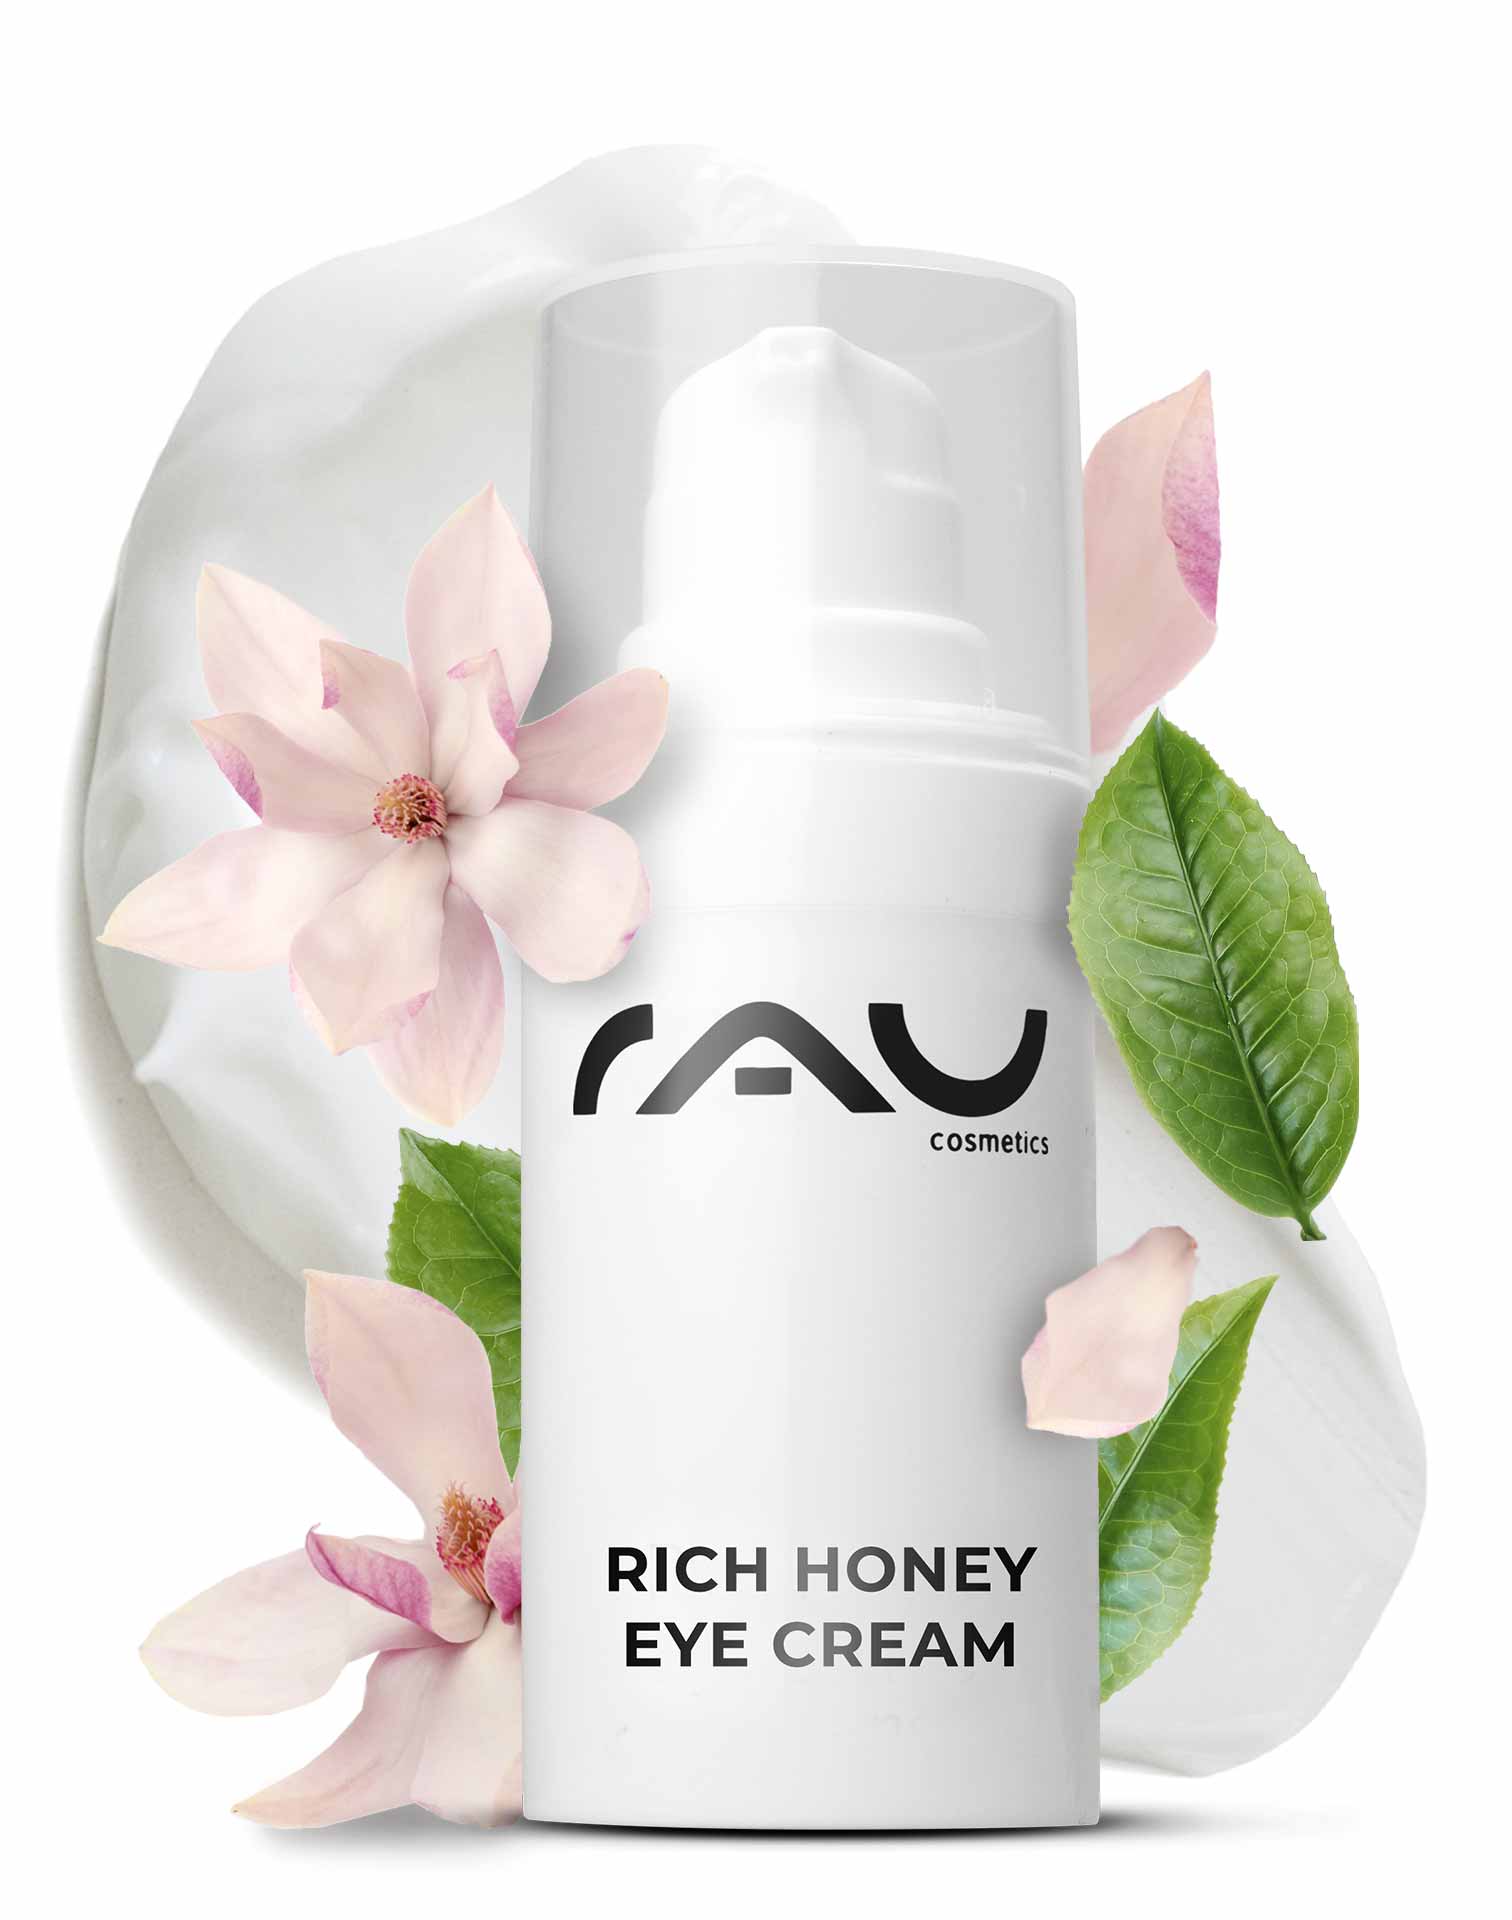 RAU Rich Honey Eye Cream 15 ml - For a Fresh and Radiant Eye Area at Any Age!